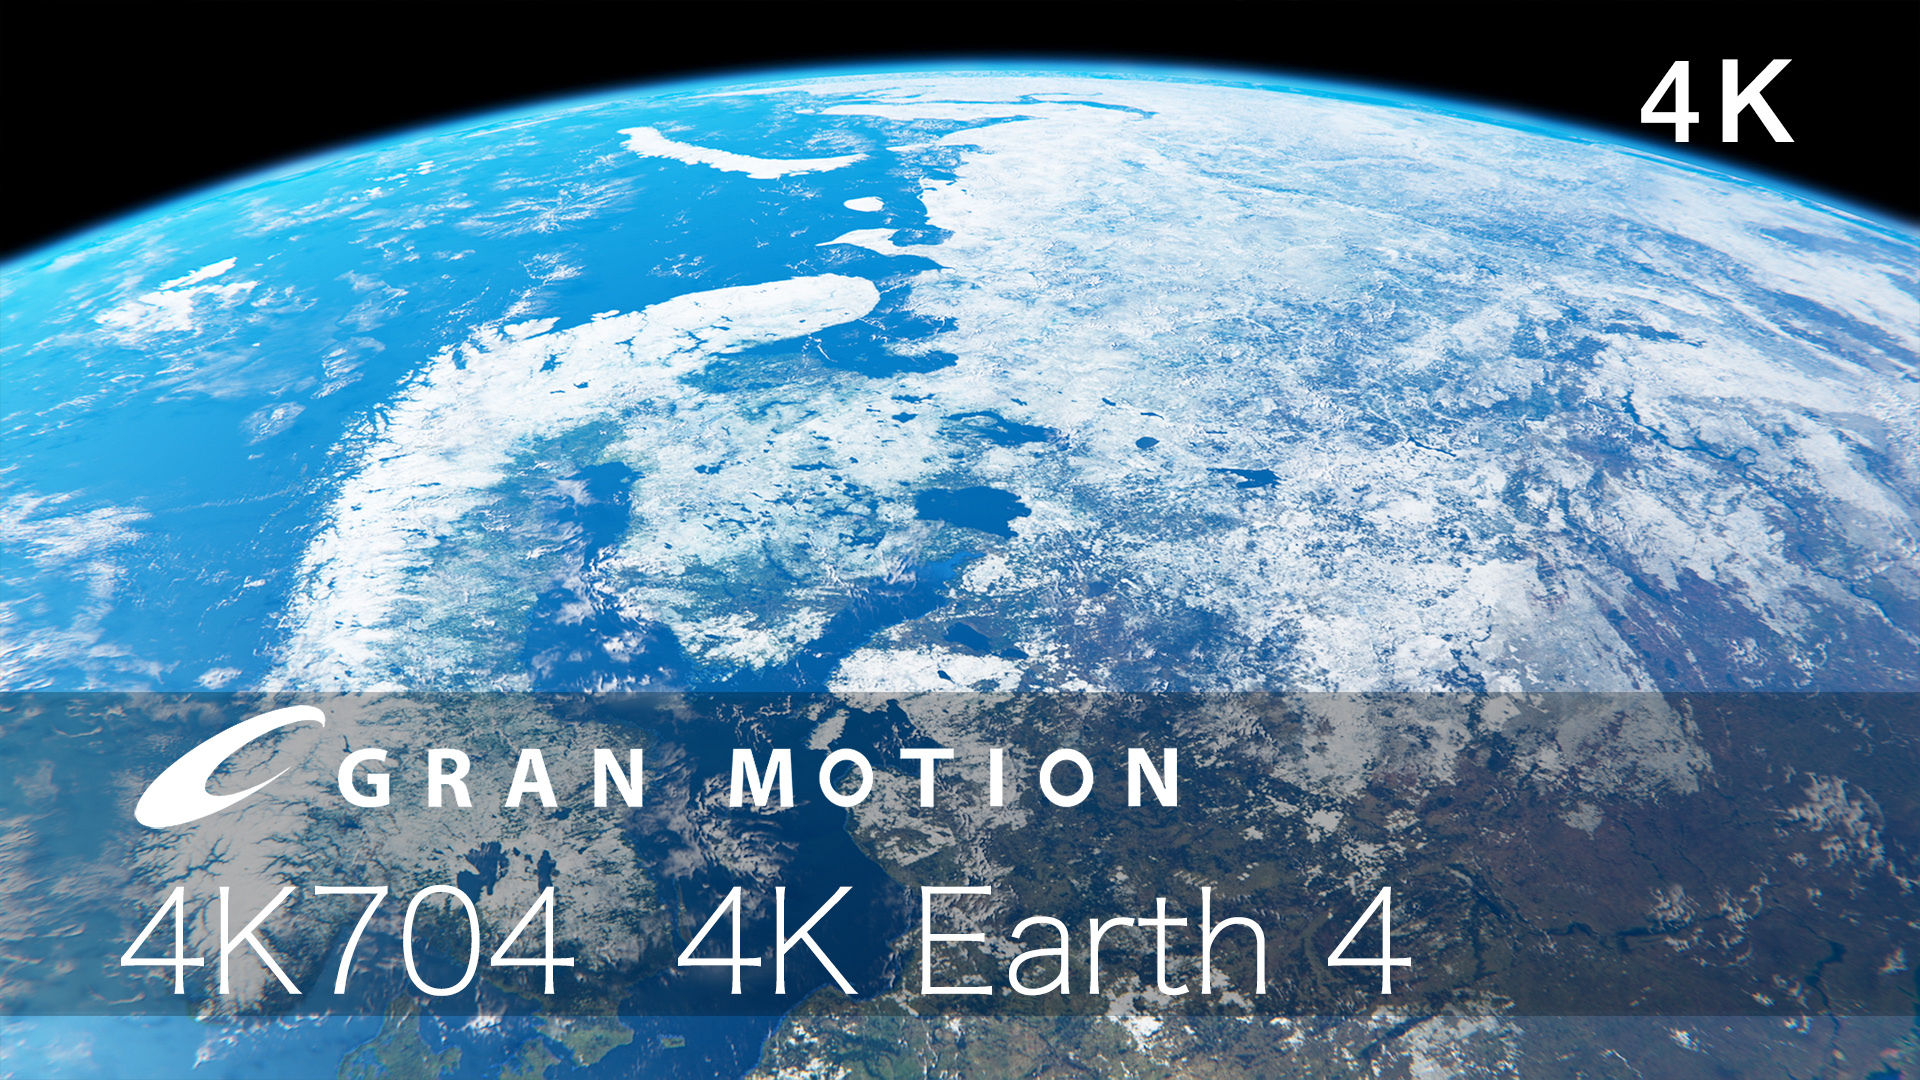 4k704dl 4k地球4 グランモーション 4k動画素材集 ダウンロード製品471mb Artzone Web Shop